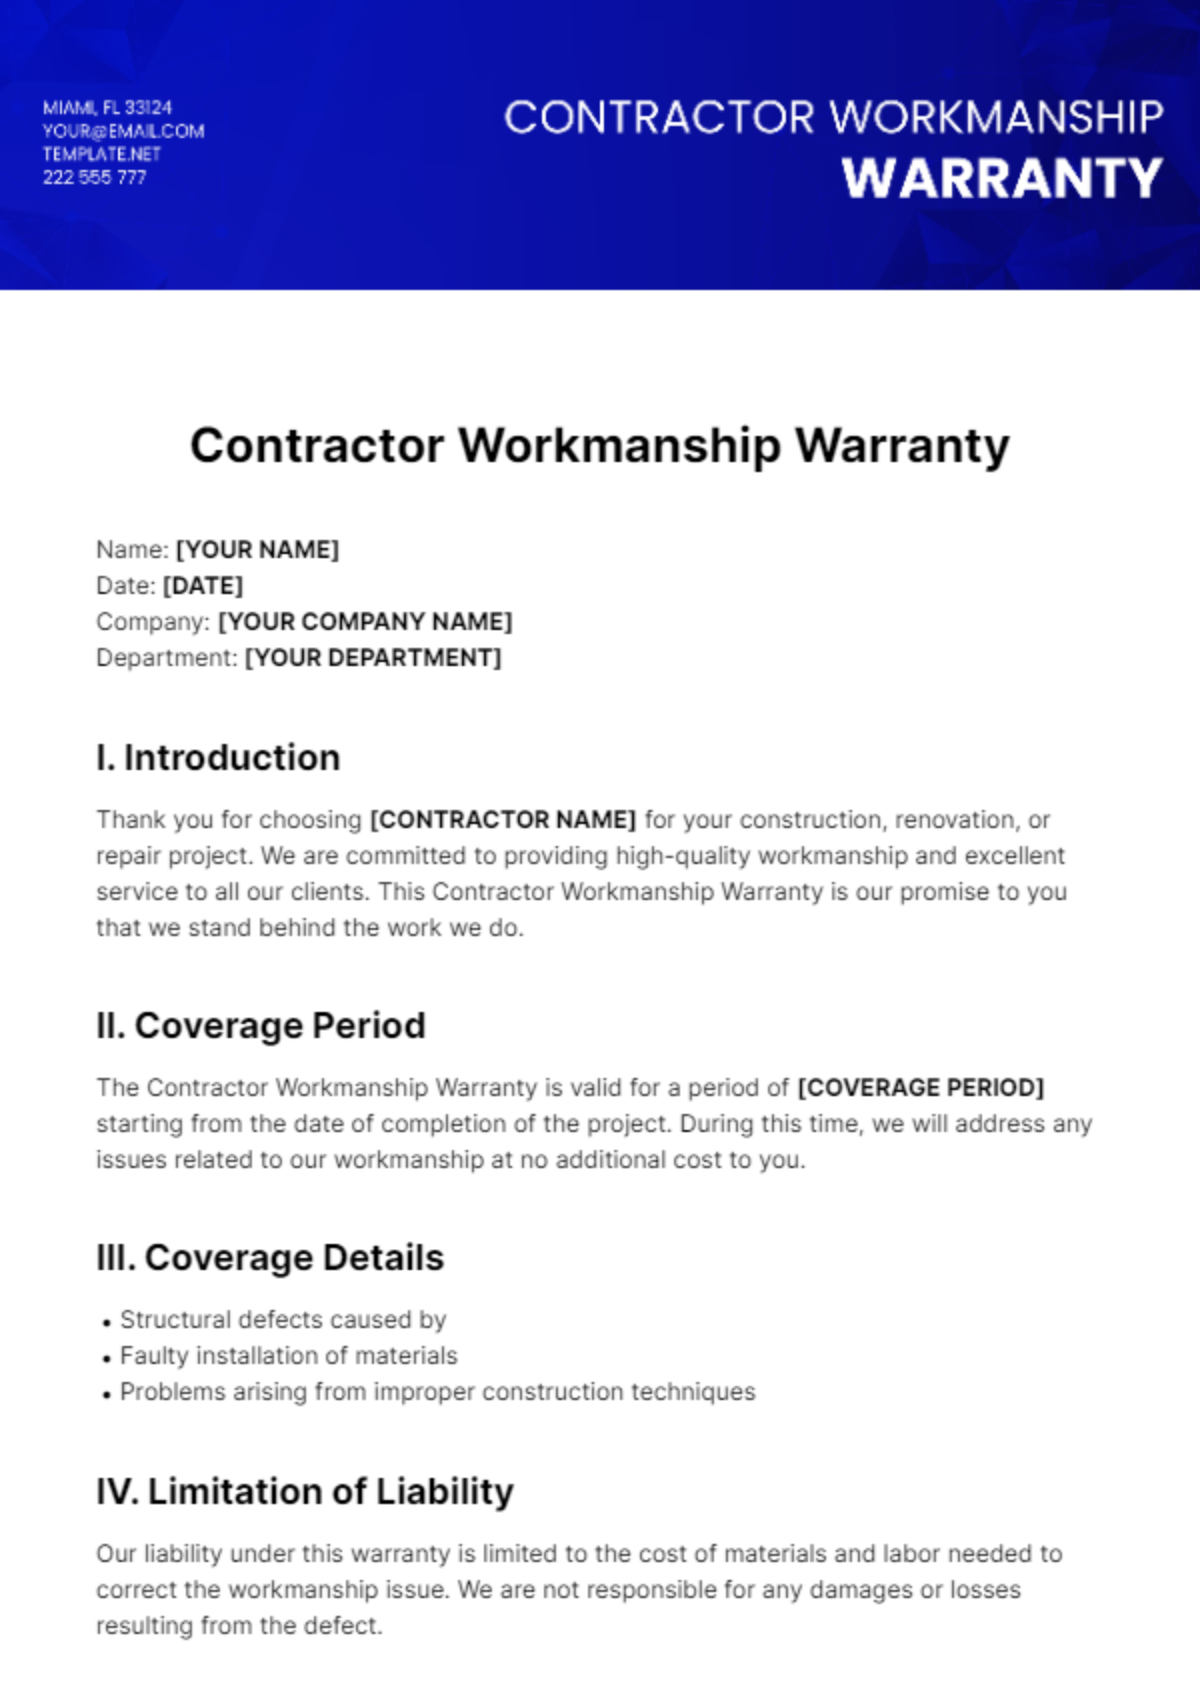 Free Contractor Workmanship Warranty Template